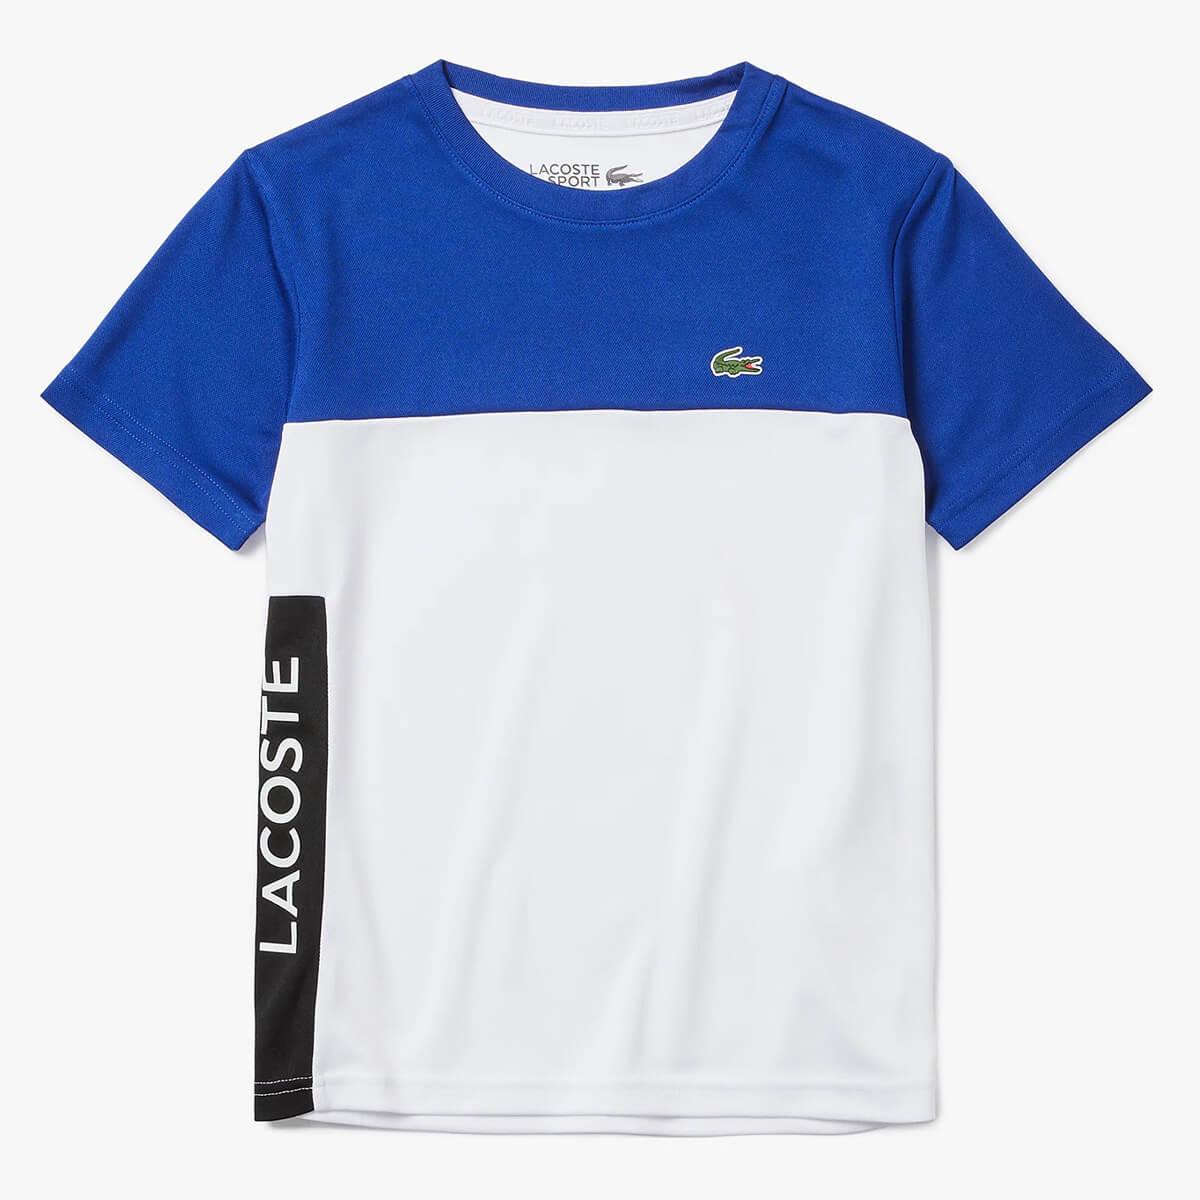 Lacoste Boys Sport Colourblock T-Shirt - Blue/White/Black - Tennisnuts.com